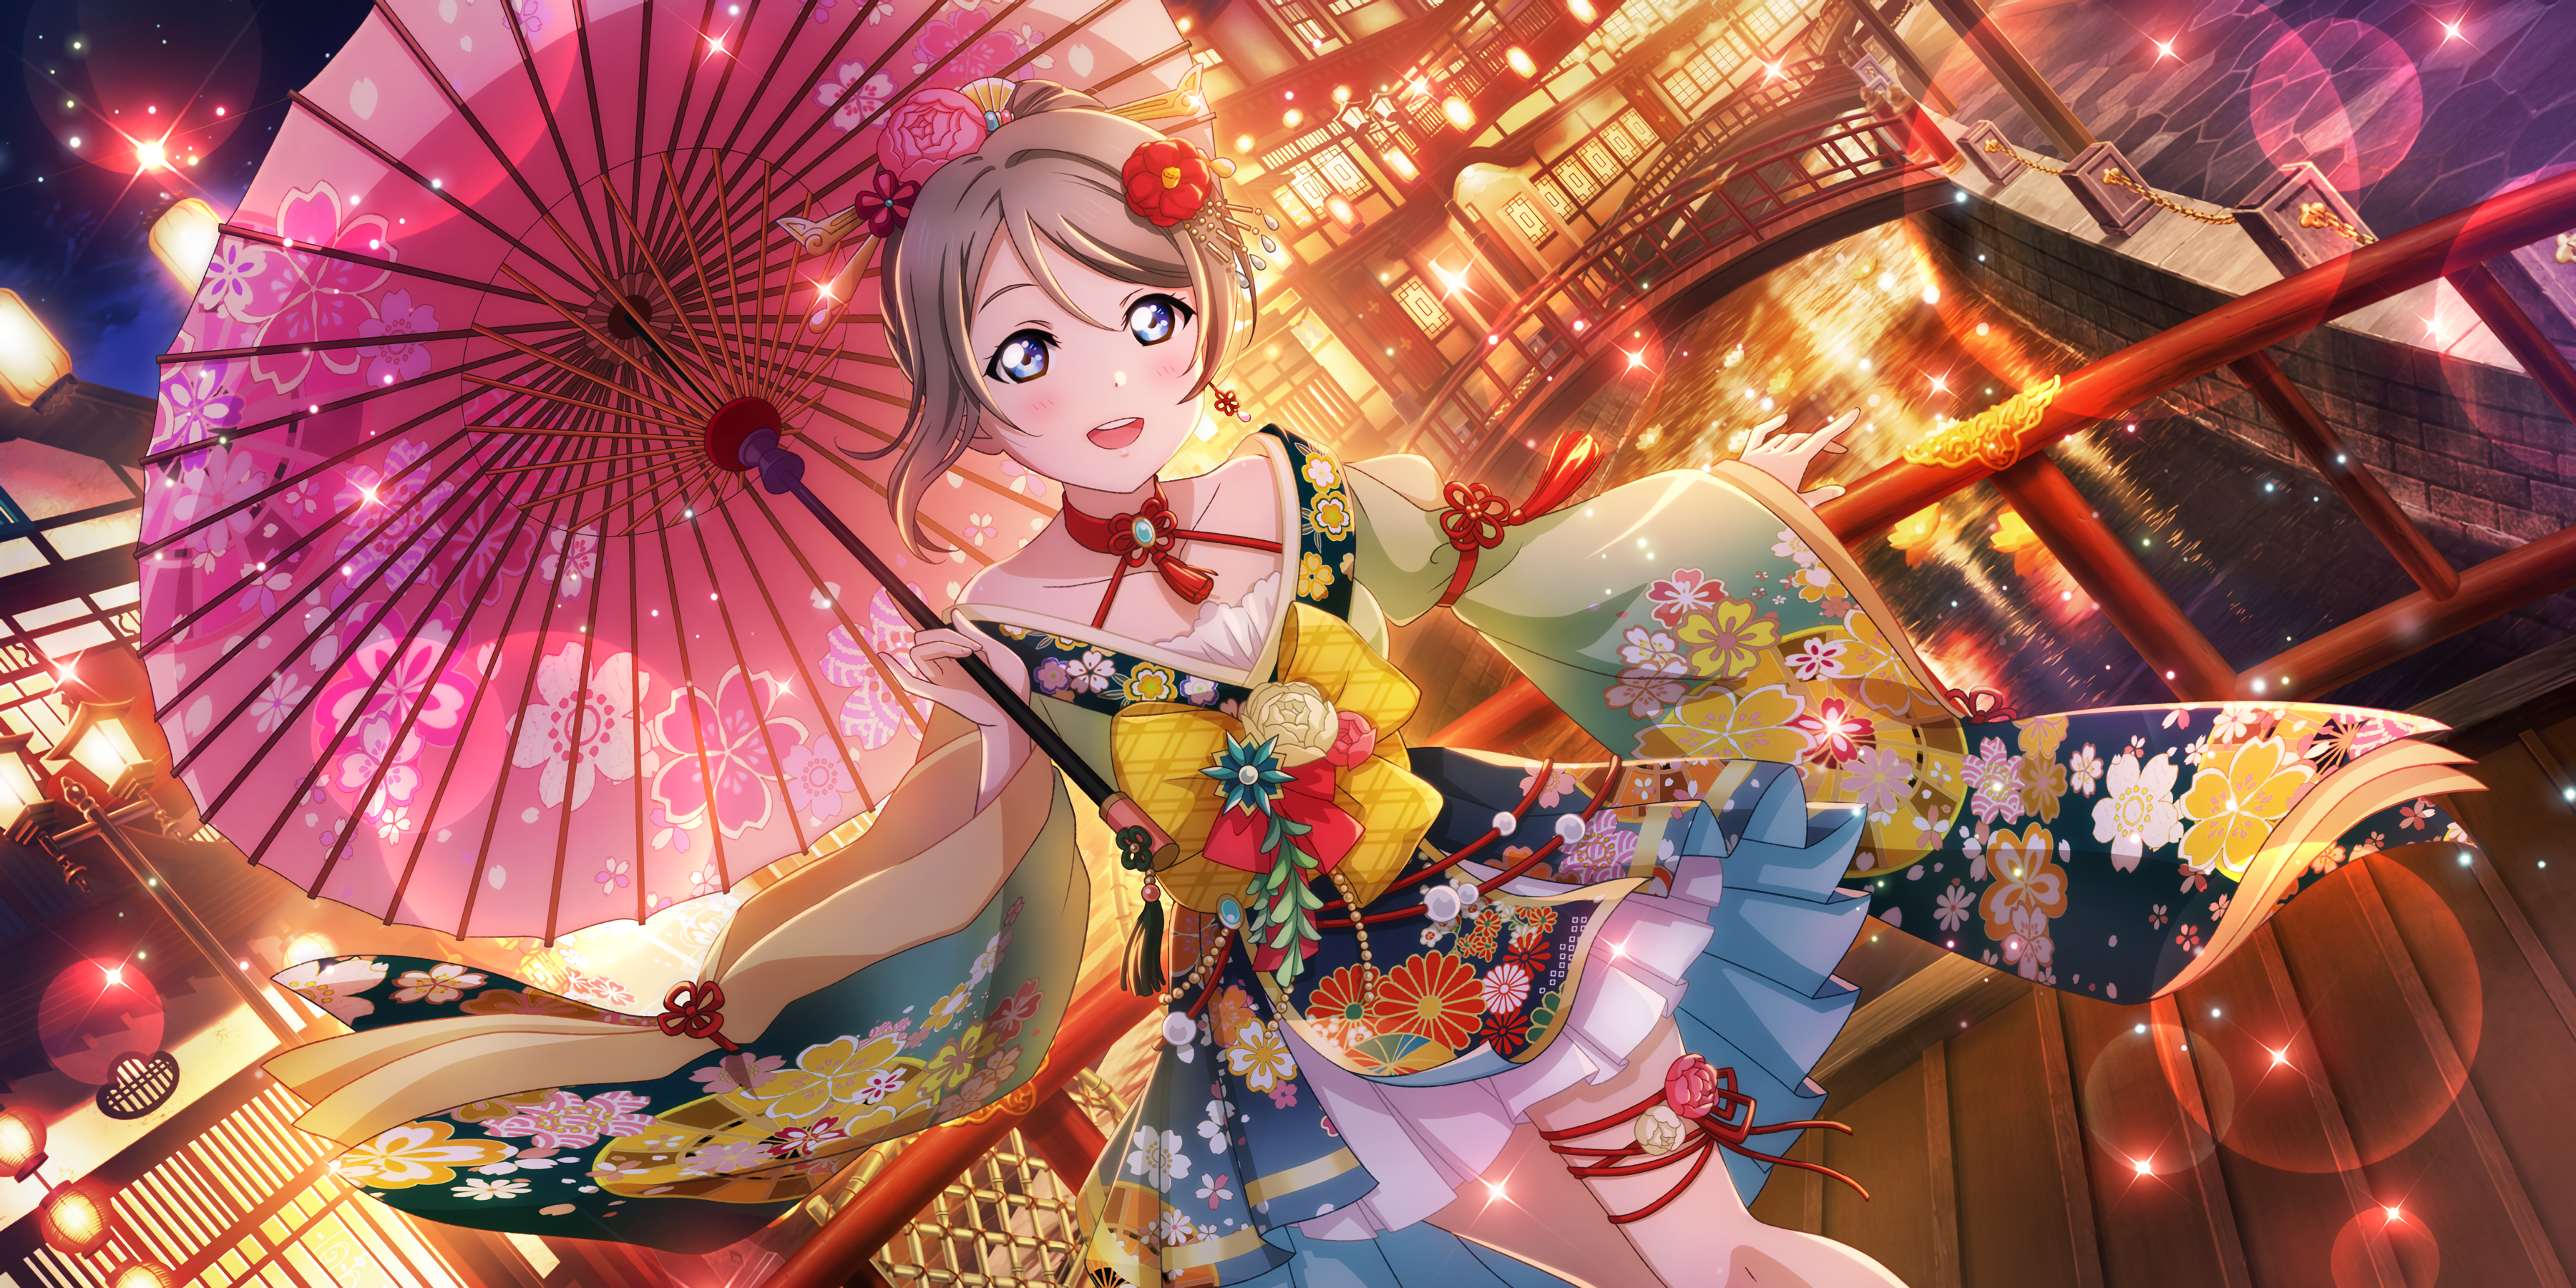 Anime 3600x1800 Watanabe You Love Live! Sunshine Love Live! anime anime girls umbrella stars night water kimono flower in hair bubbles